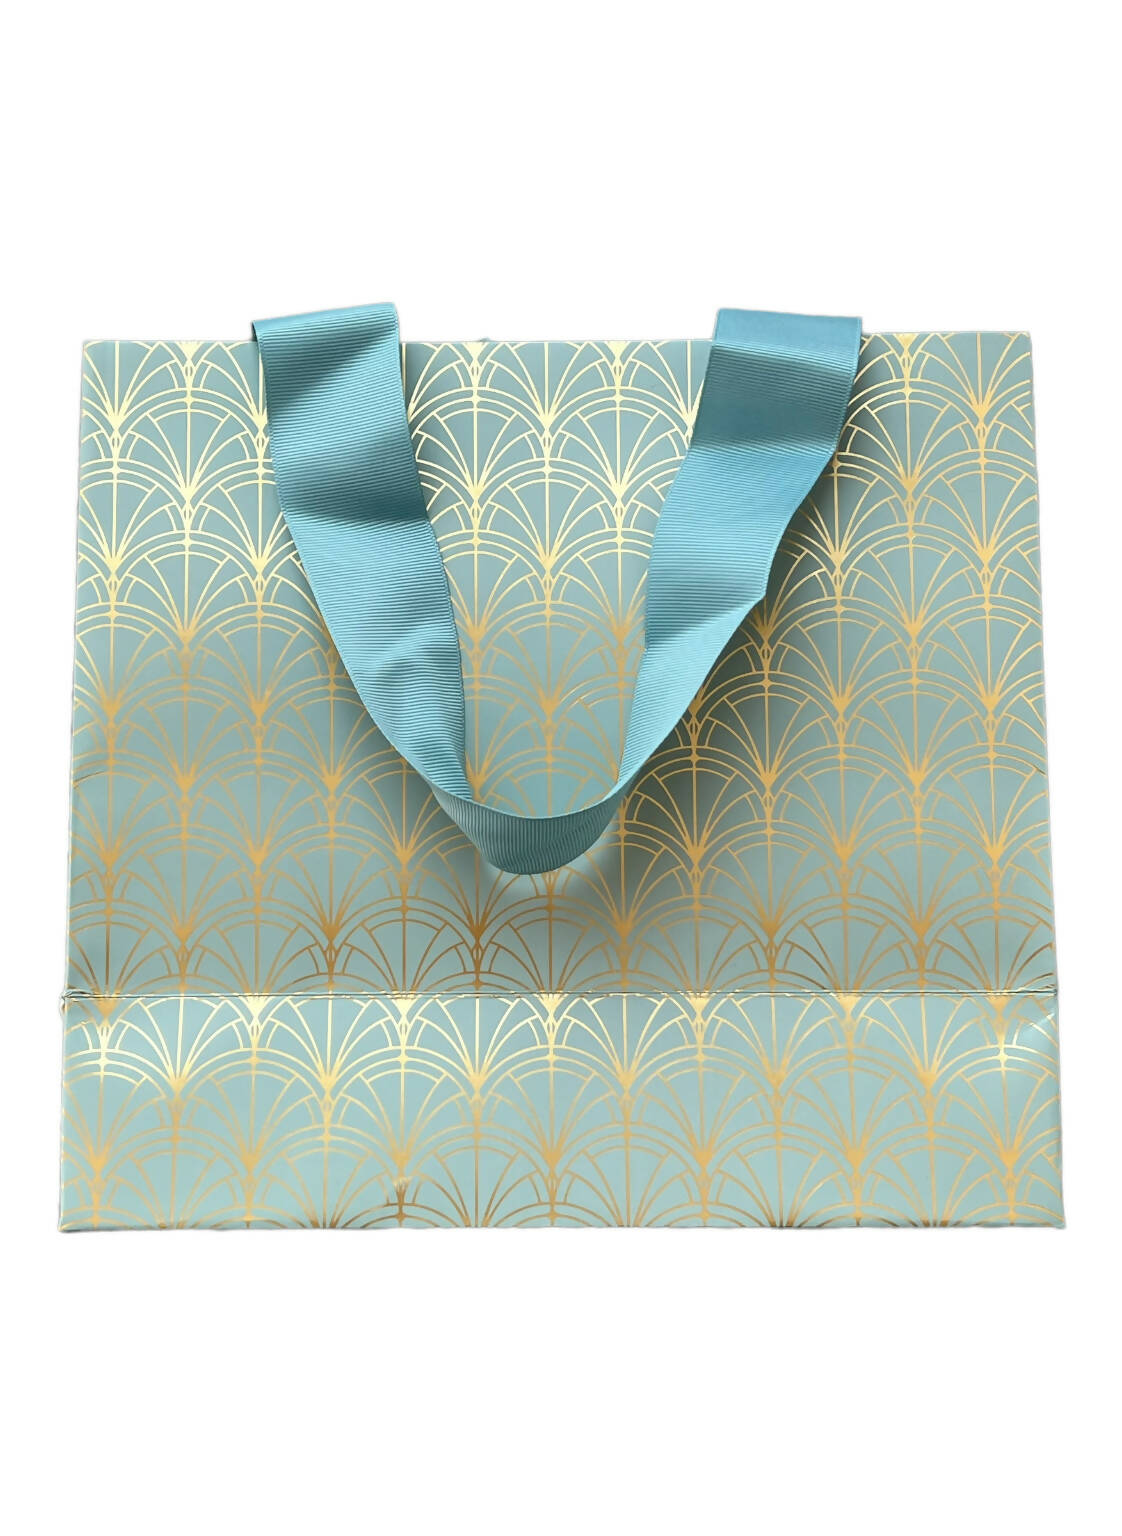 Medium Gift Bag blue